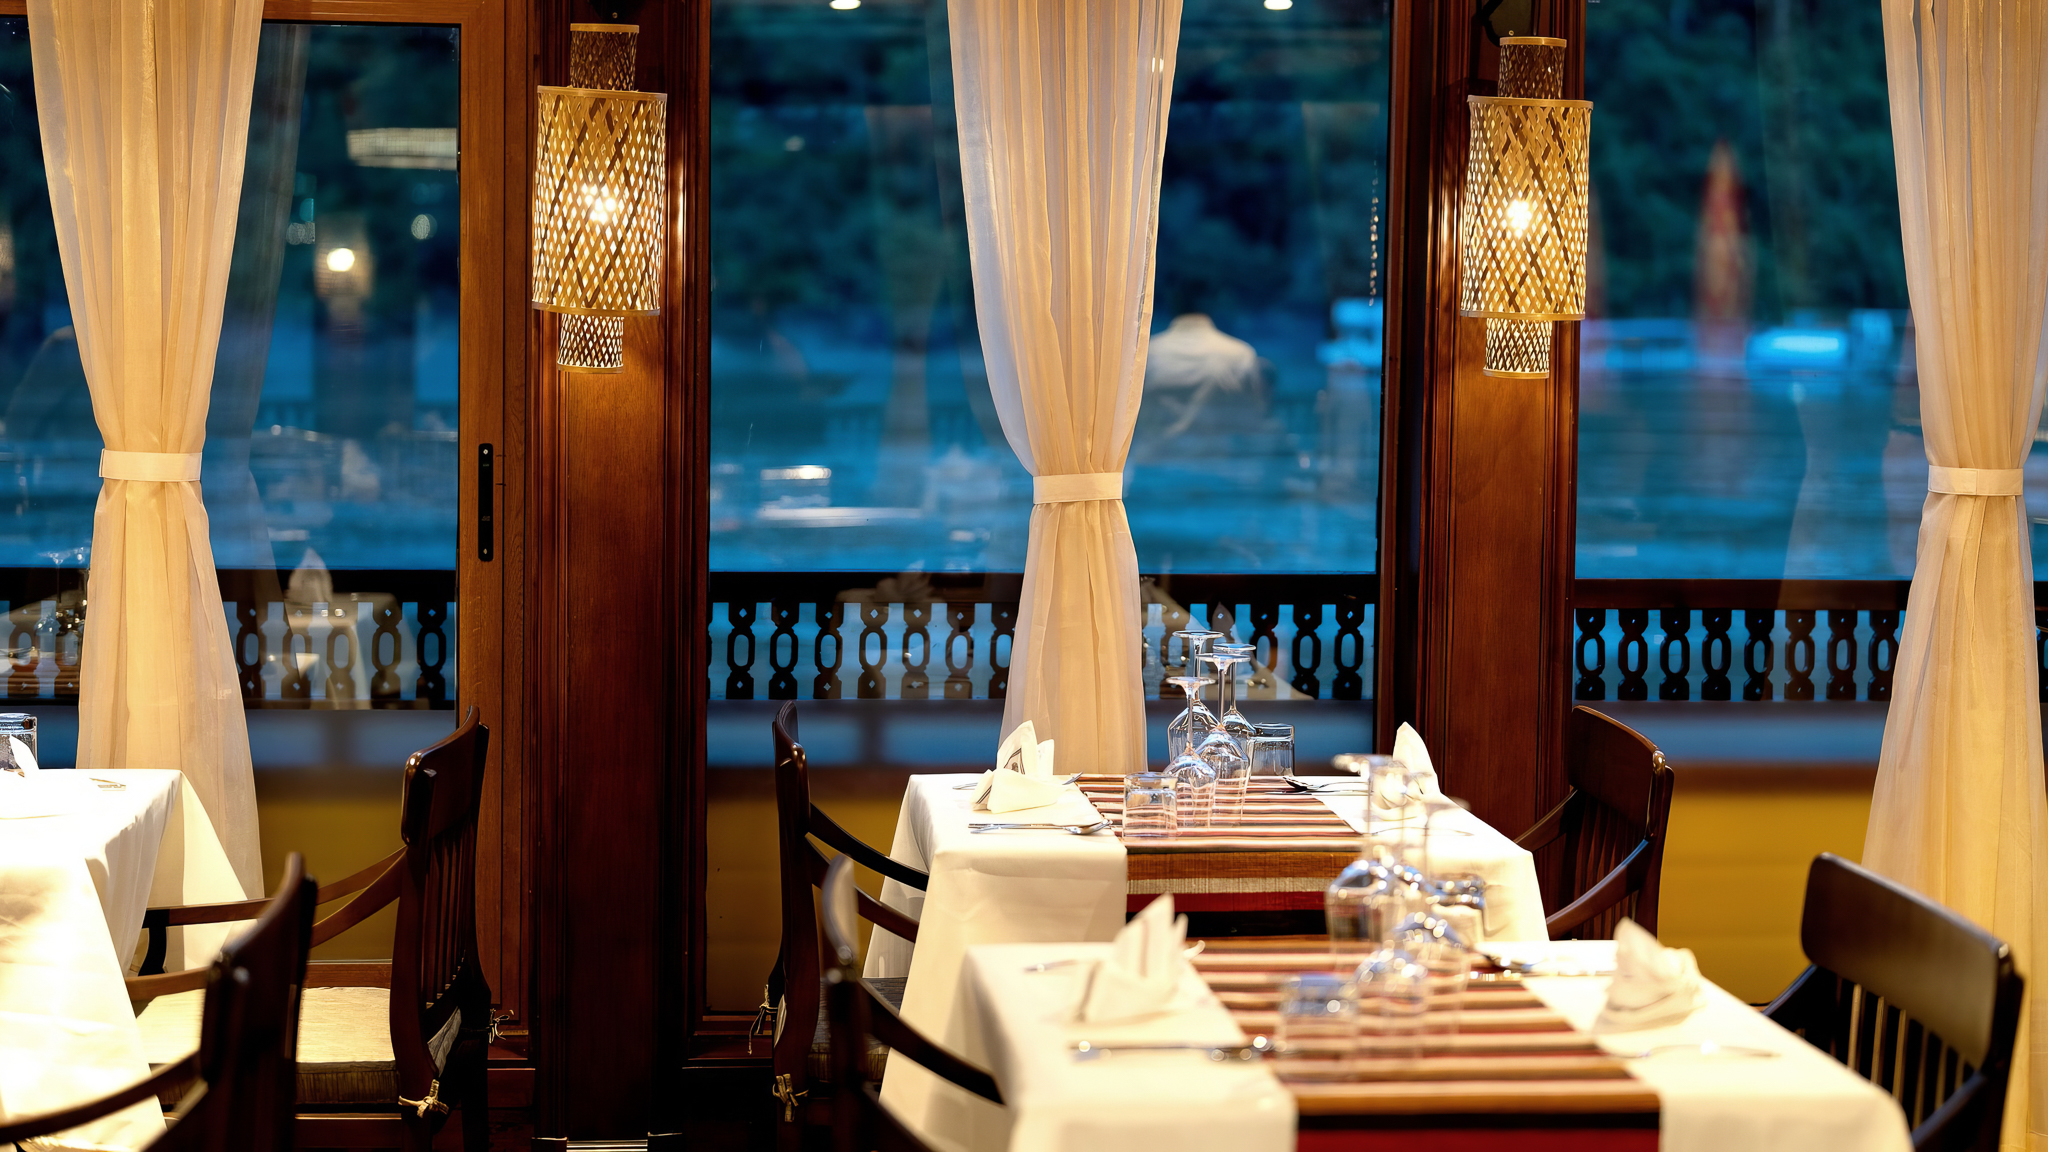 legant designed restaurant with beautiful river views